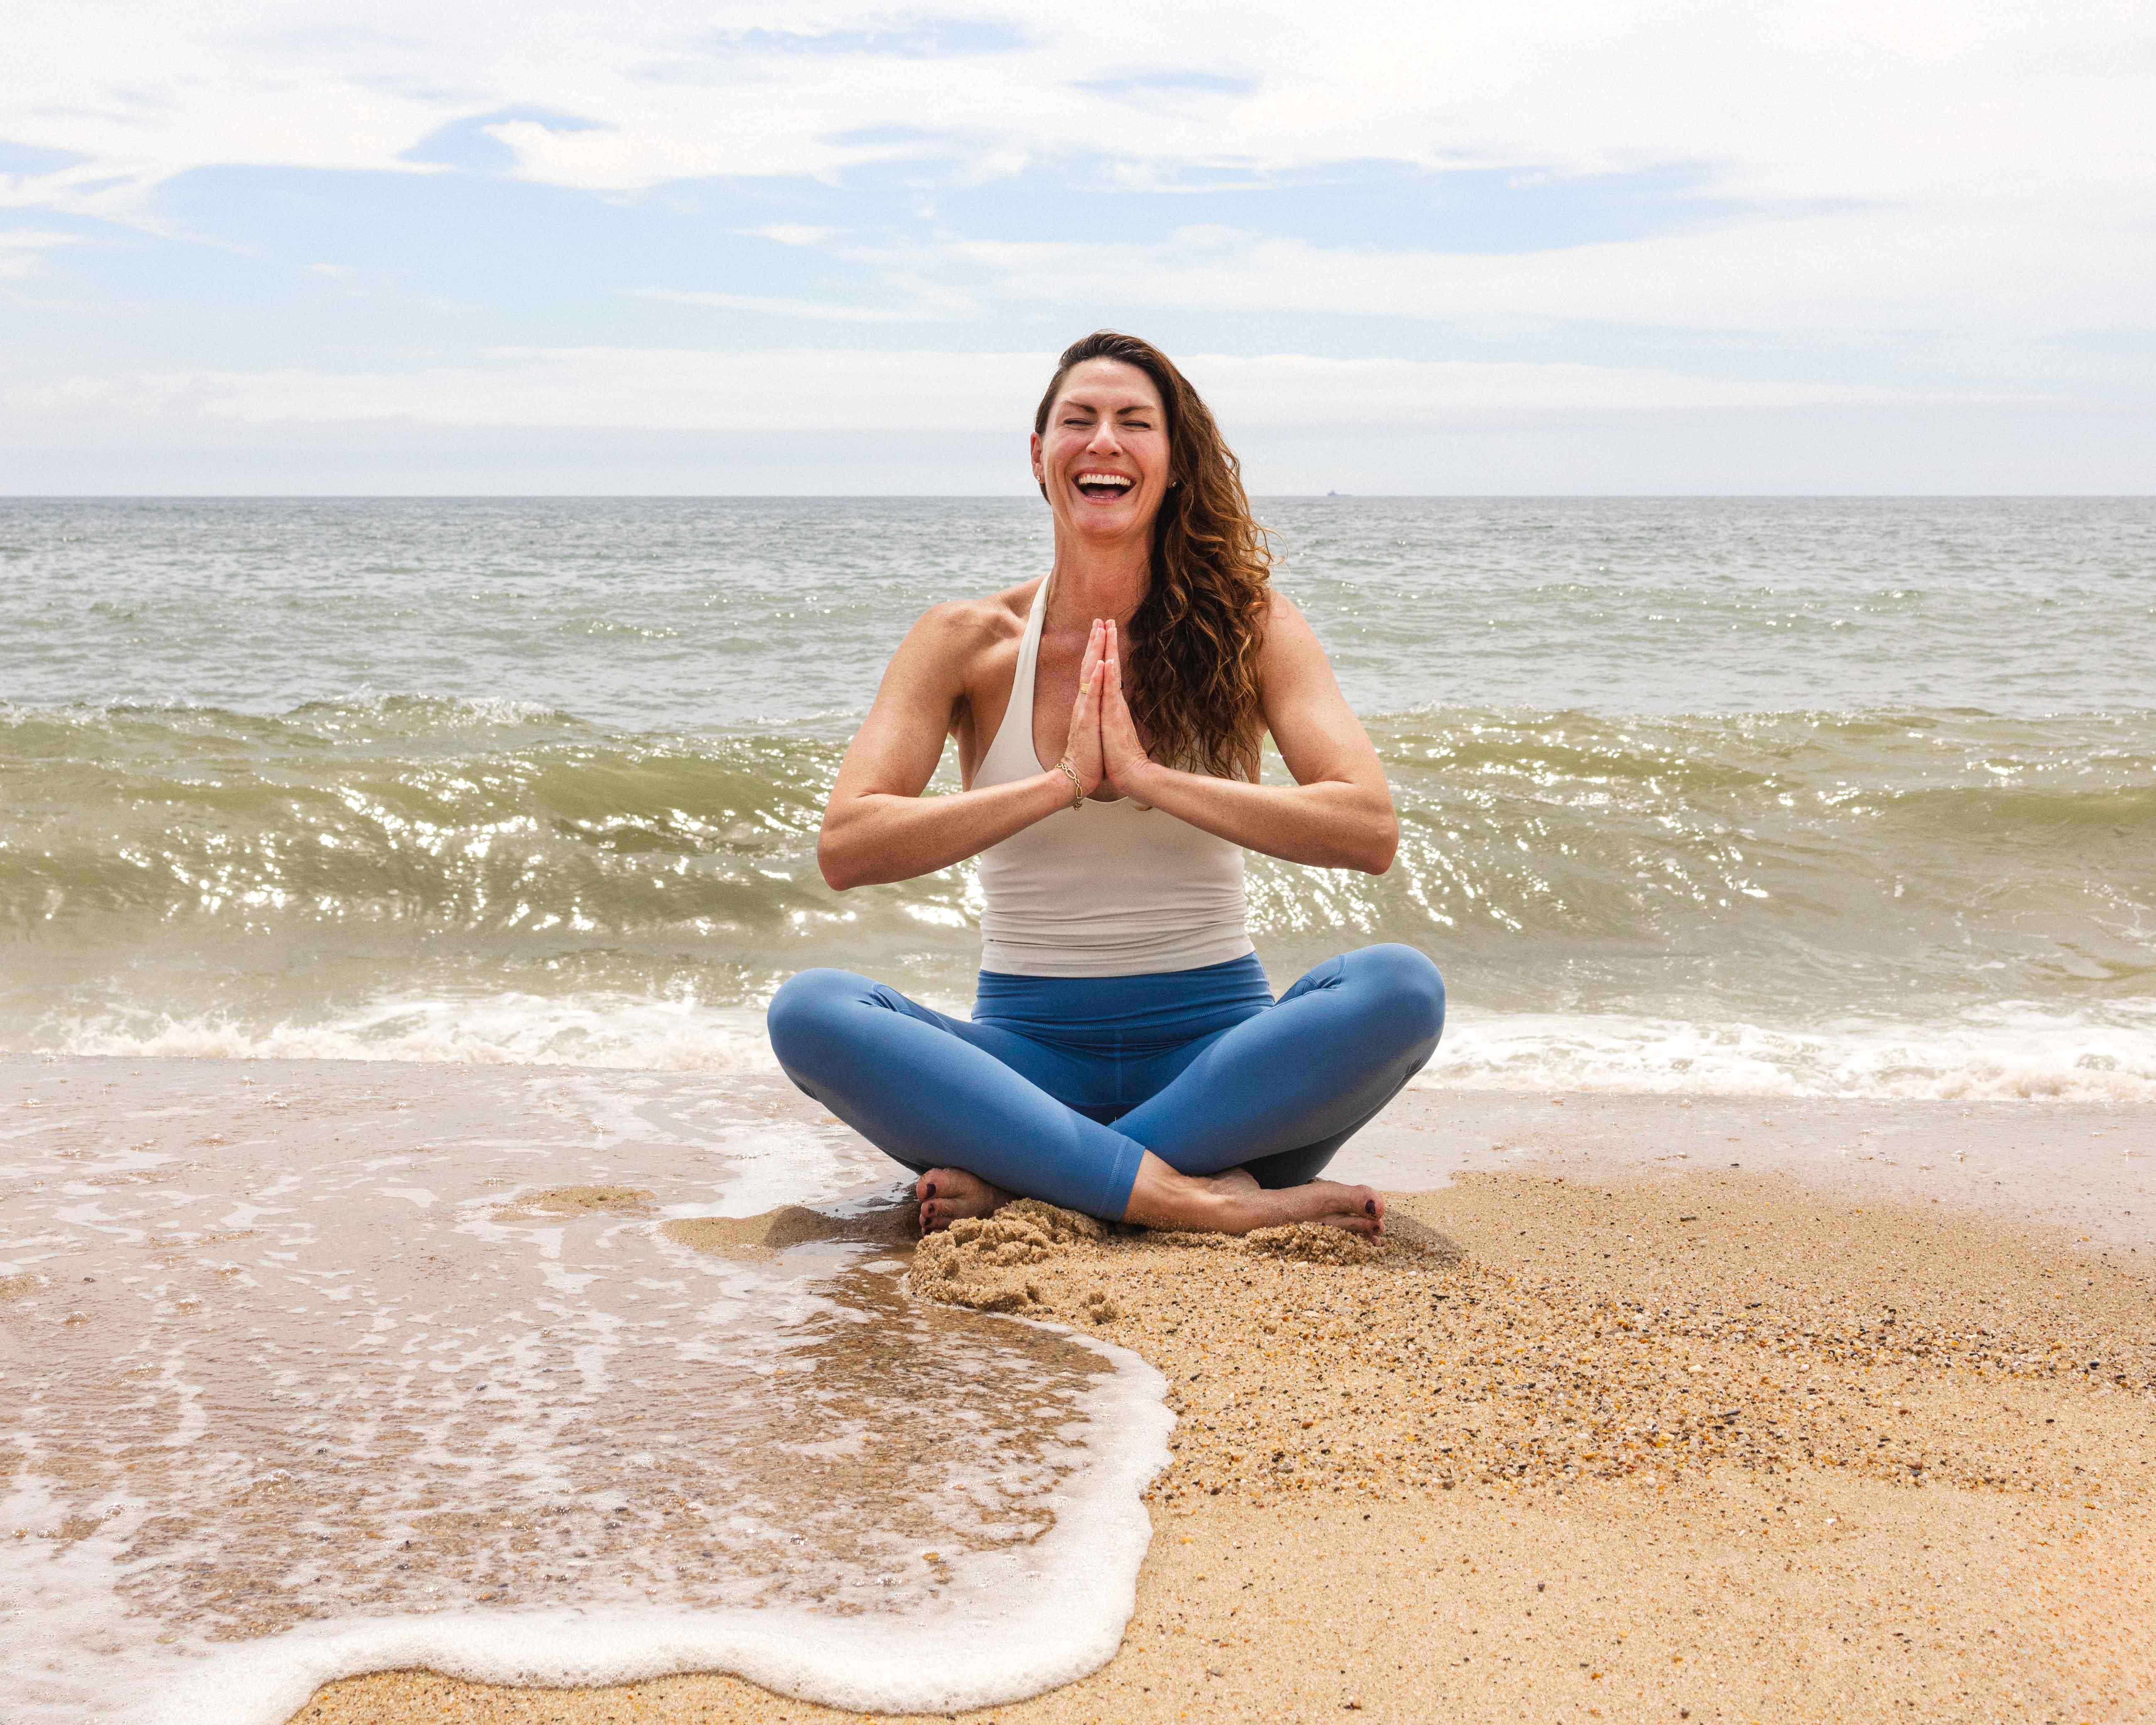 Kat Ruiz smiling and sitting in yoga pose on beach as waves break around her.